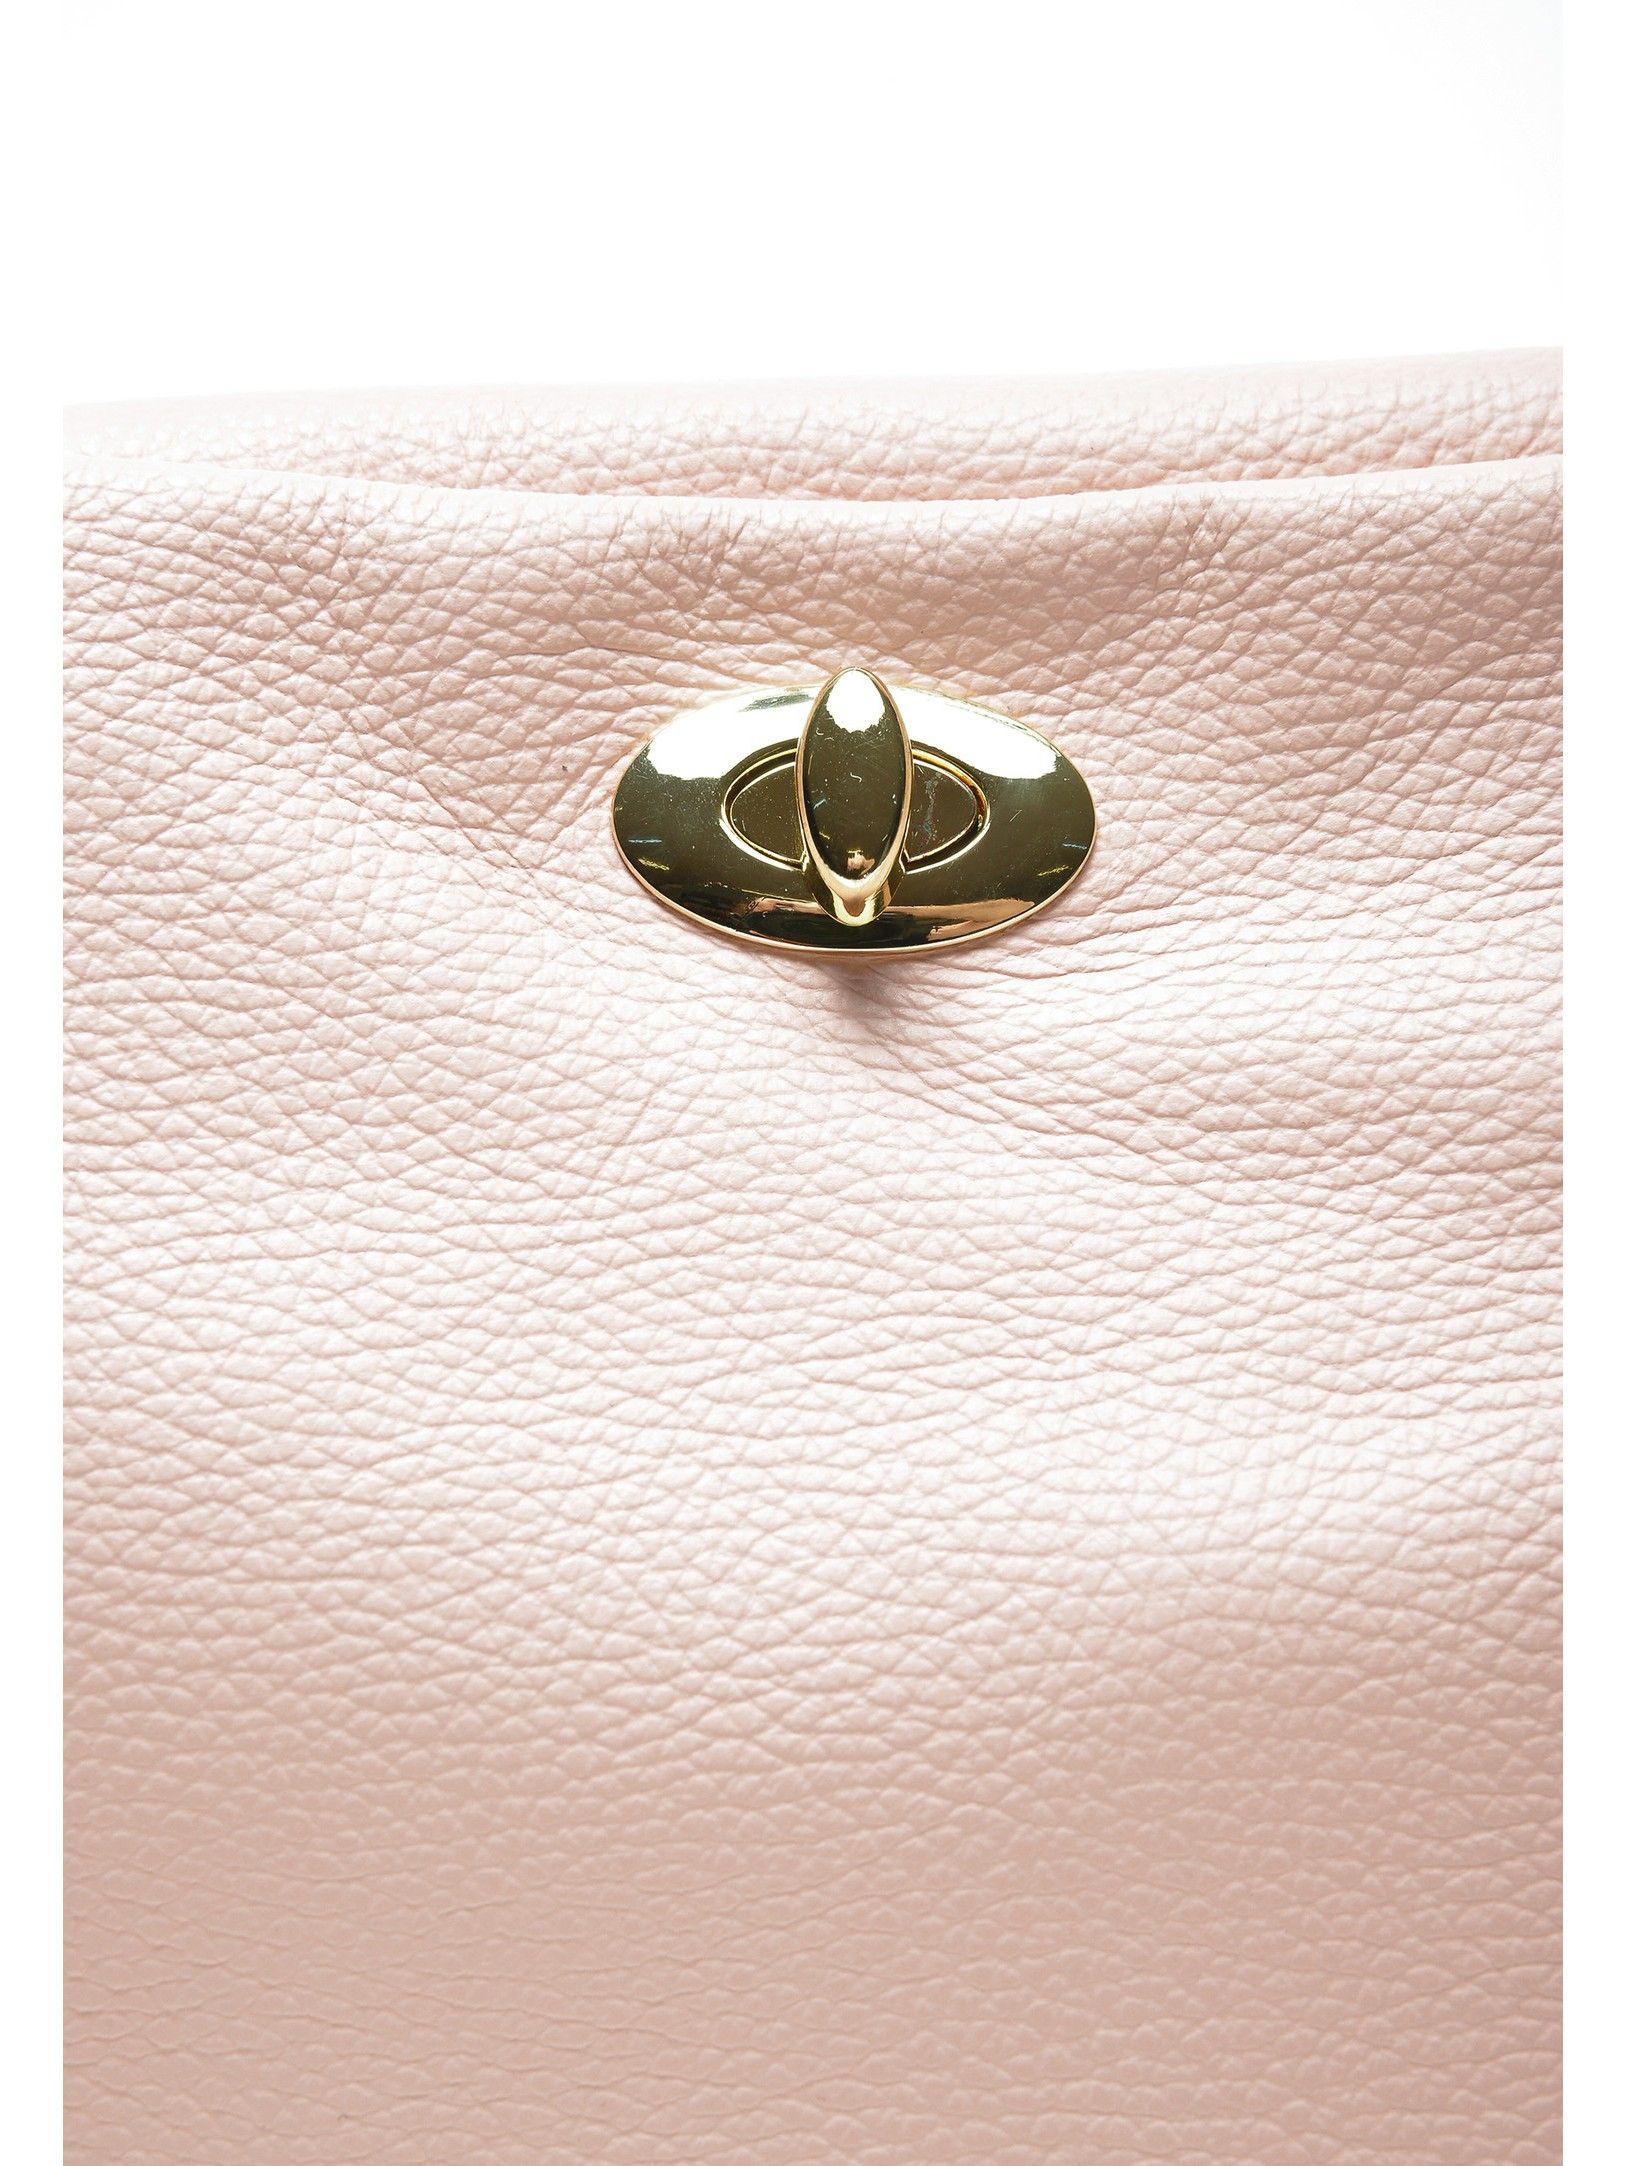 Handbag
100% cow leather
Flap over clasp closure
Inner zip pocket
Back zip pocket
Dimensions (L): 25x35x11.5 cm
Handle: 33 cm
Shoulder strap: 120 cm adjustable